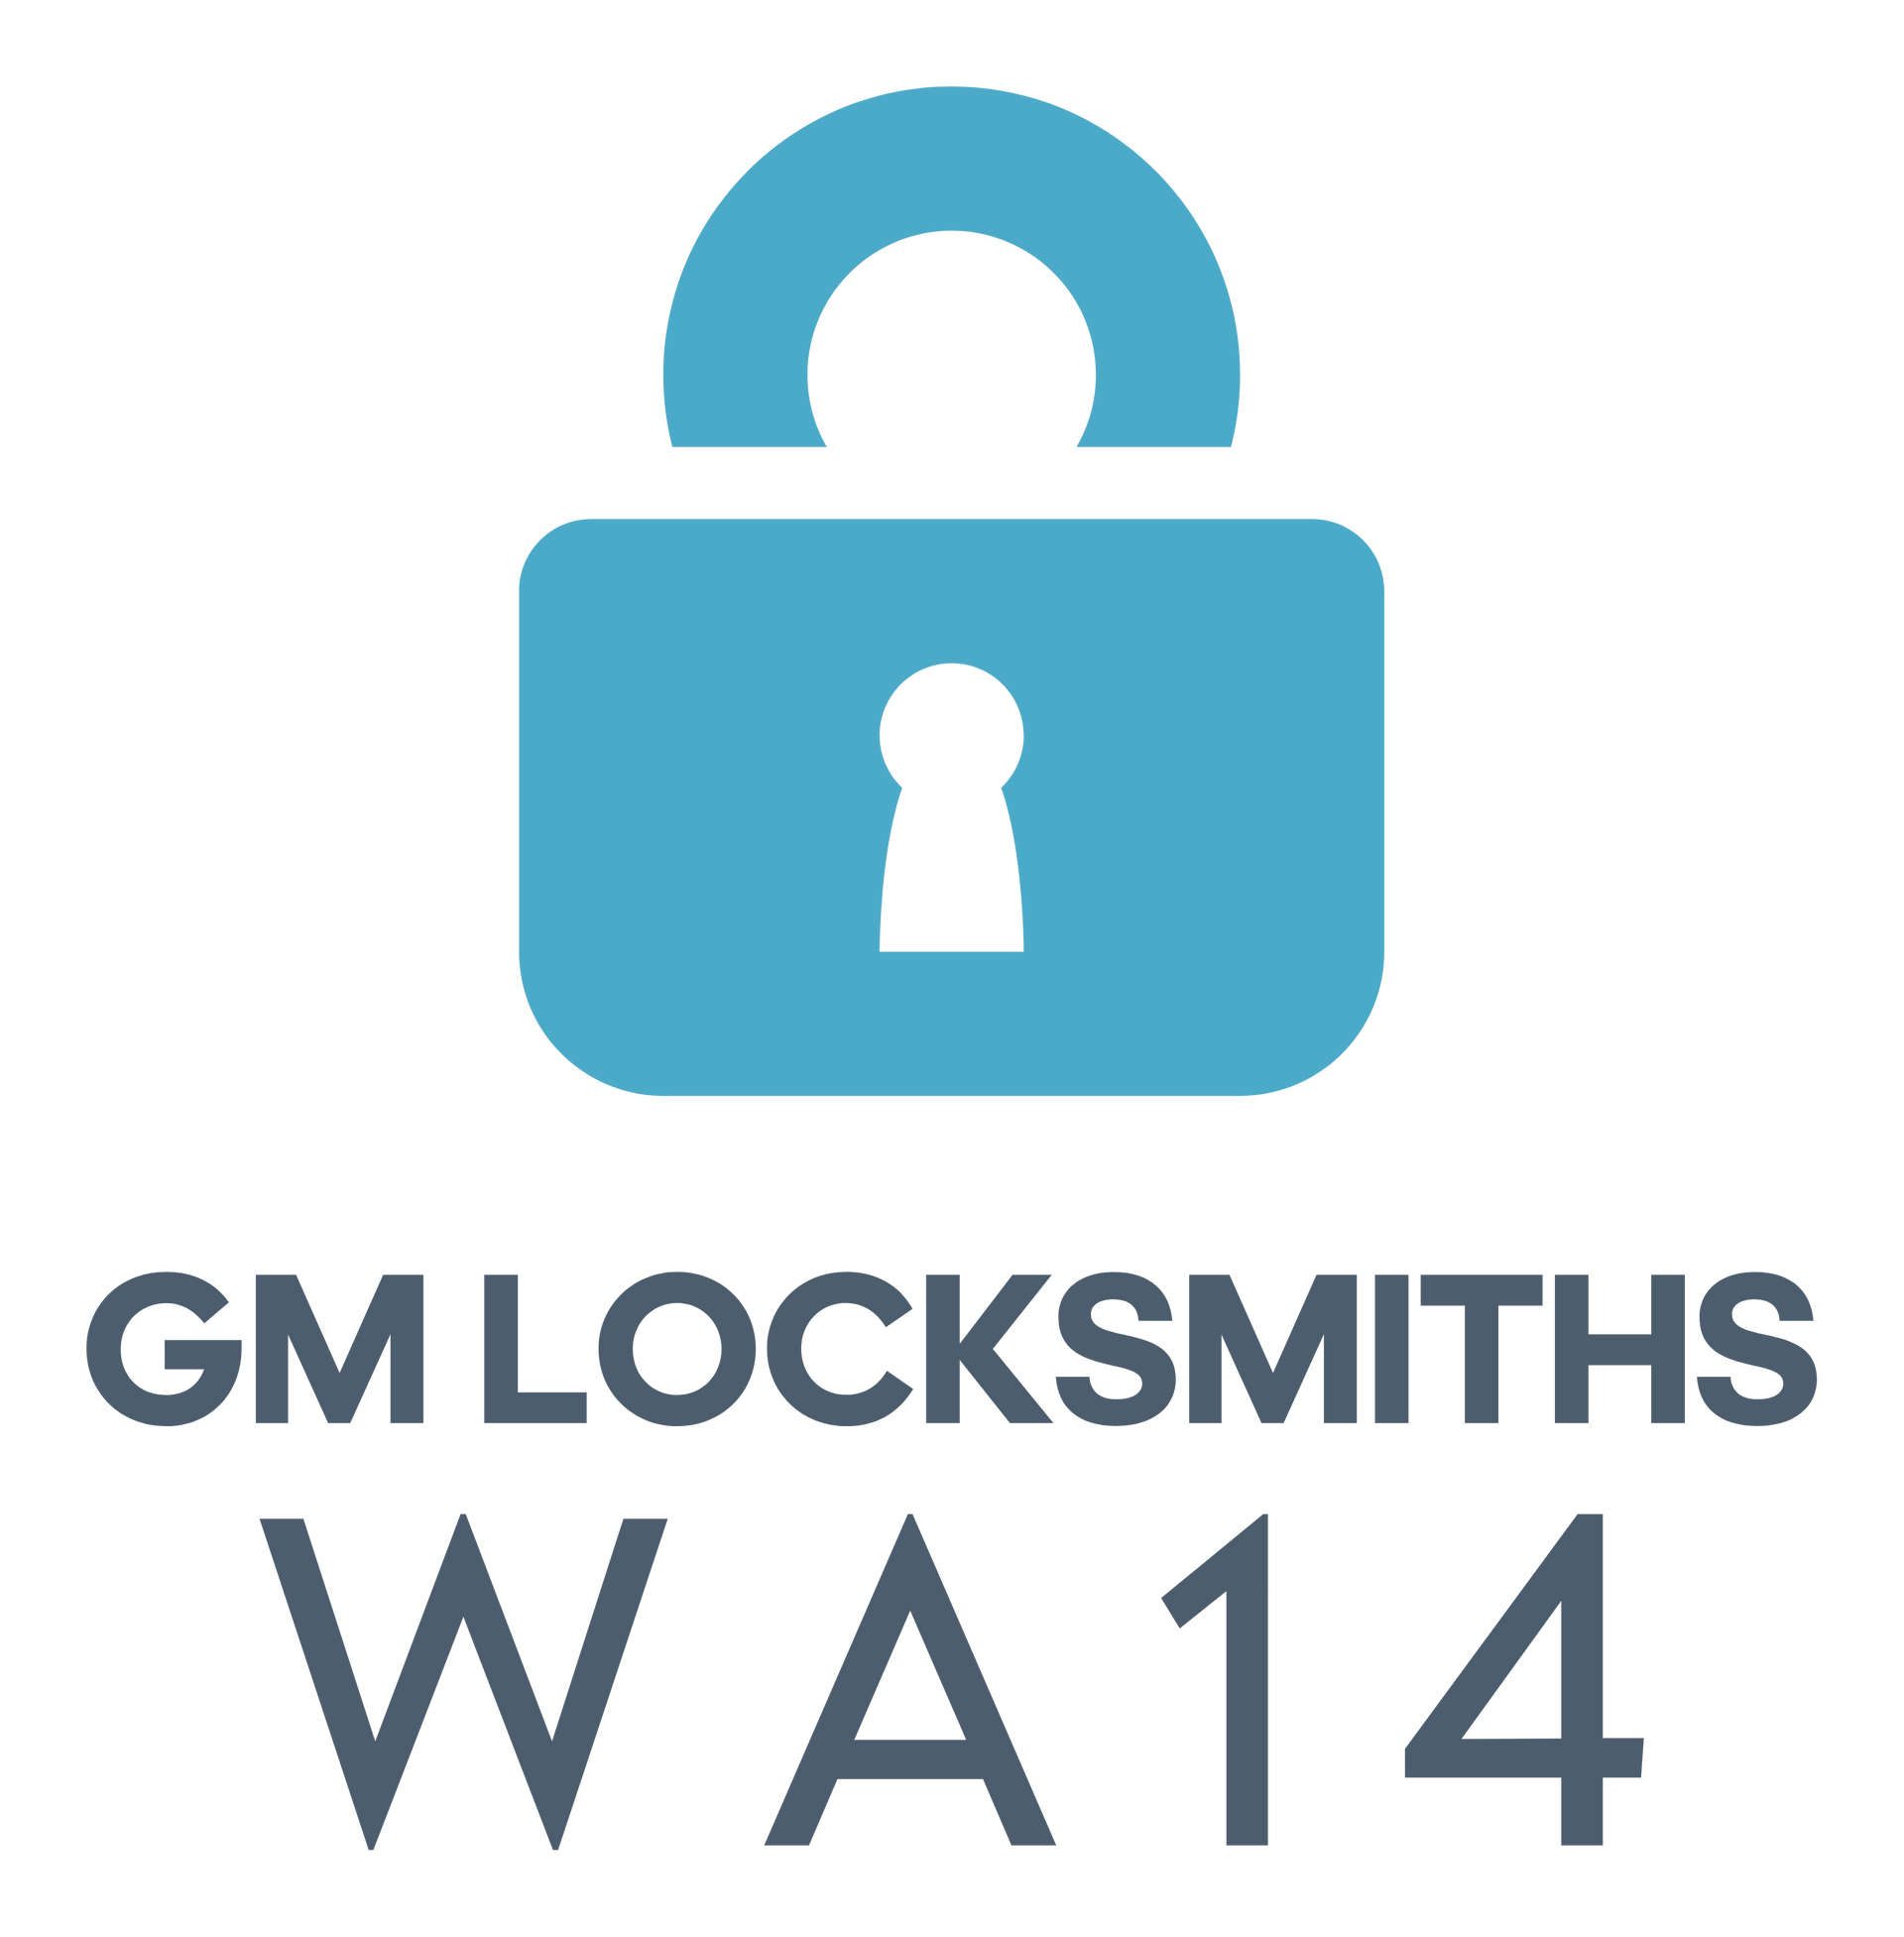 GM Locksmiths WA14 Altrincham logo